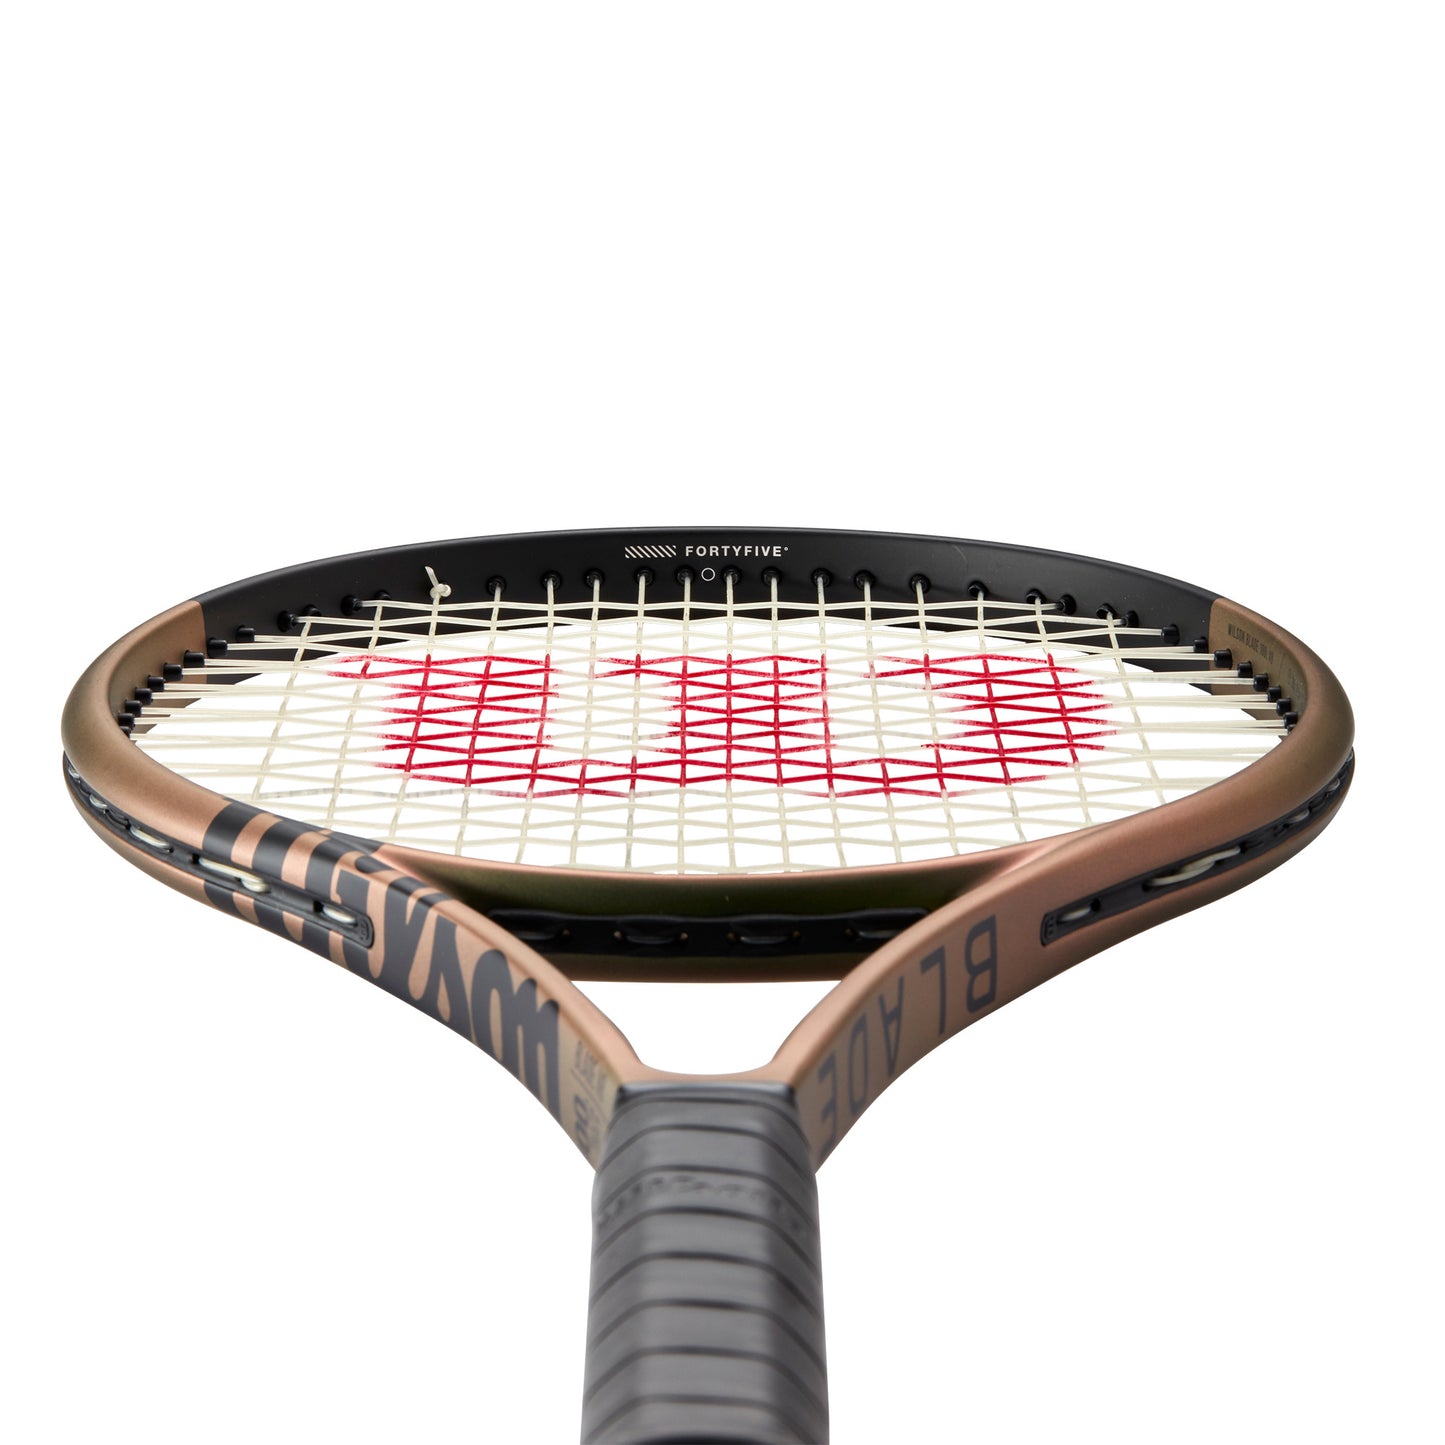 Wilson Blade 100L v8 Tennis Racket Frame